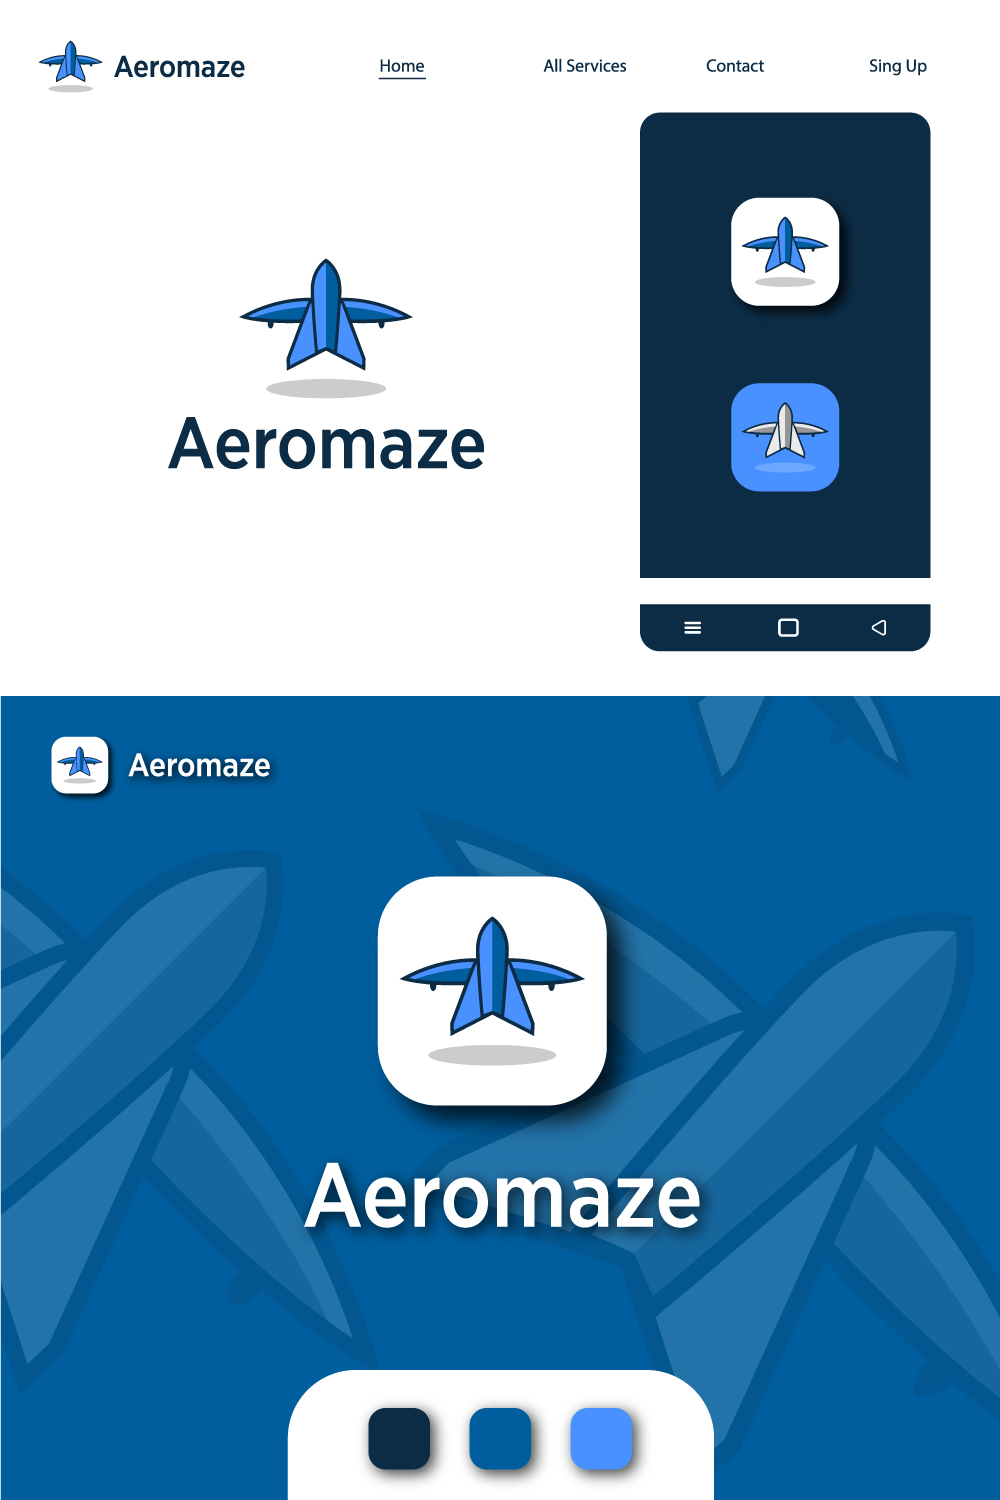 Aeromaze Logo design, creative, minimal, colorful pinterest preview image.